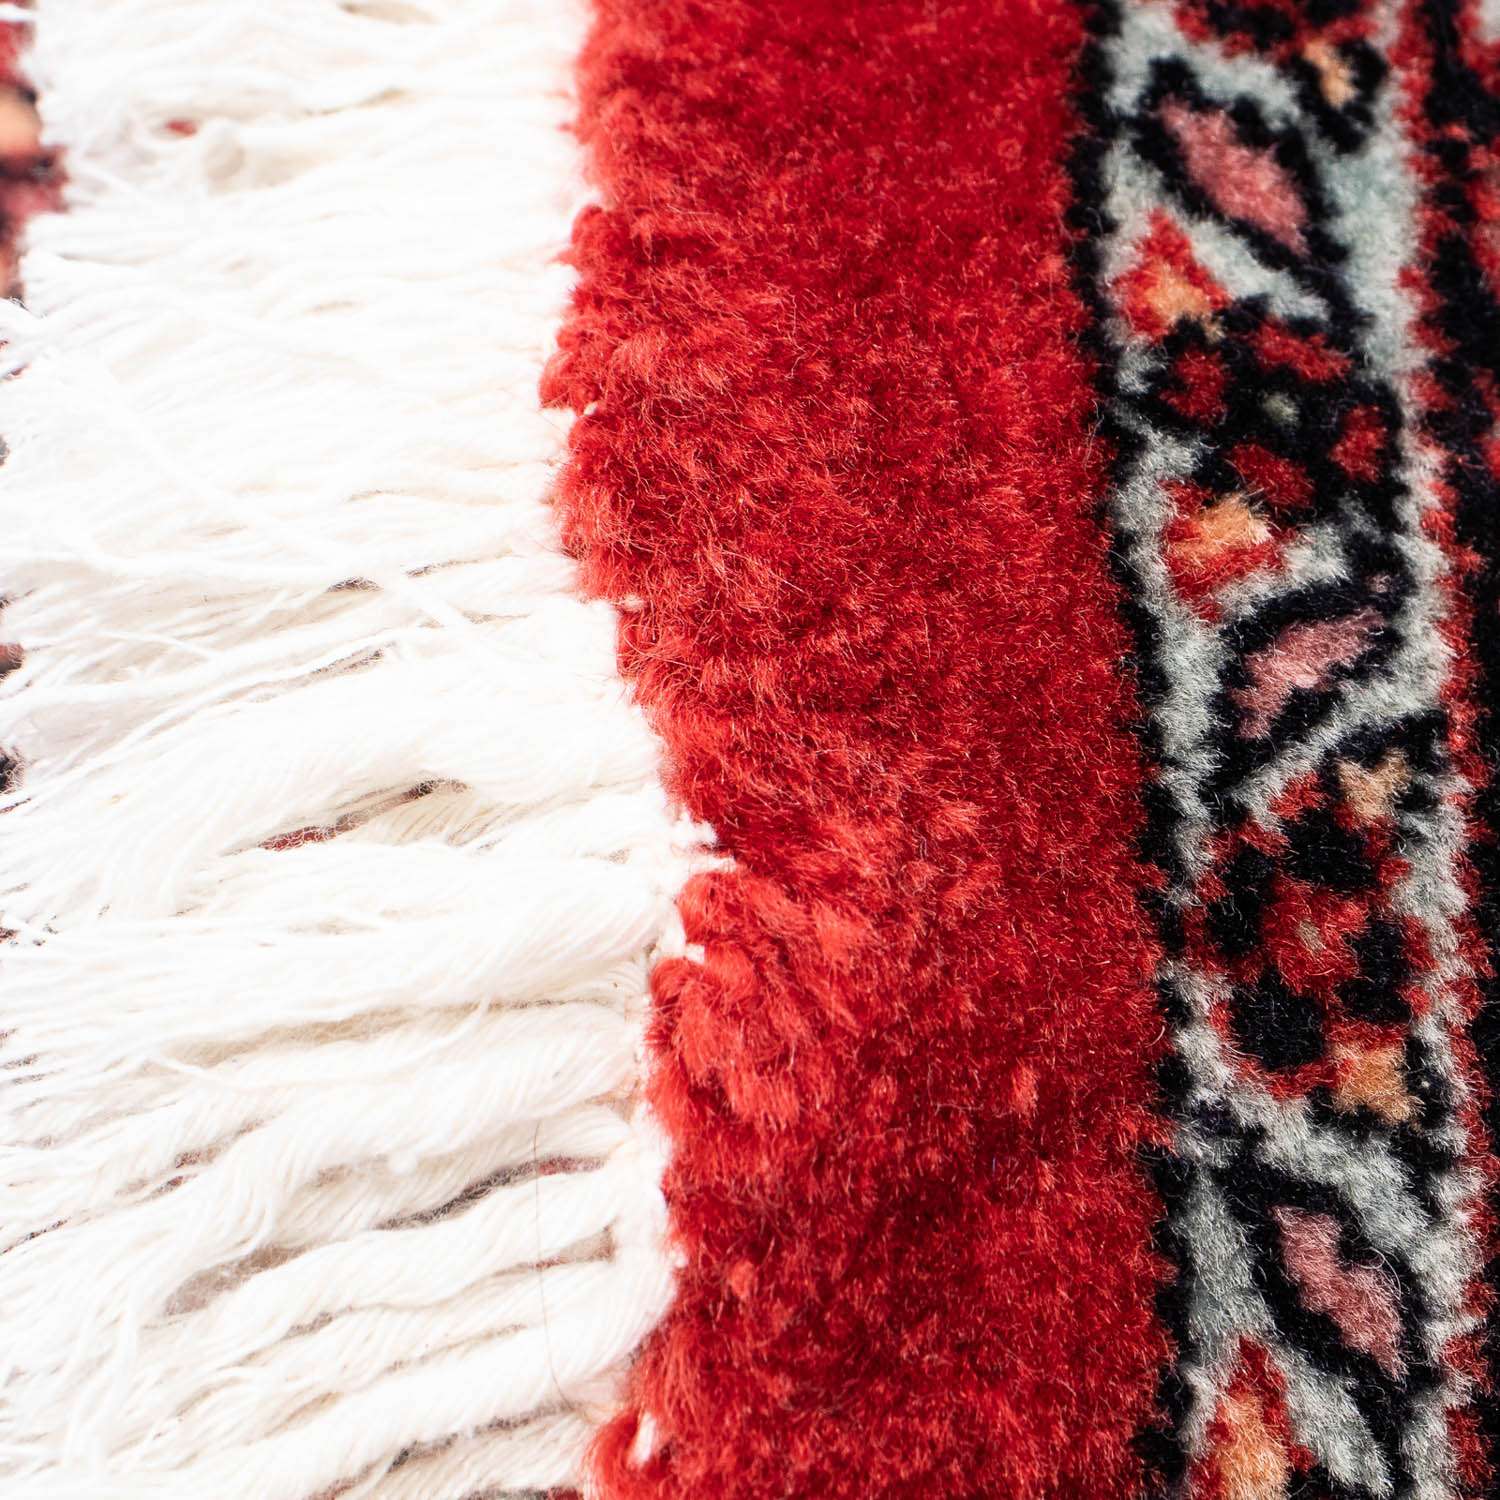 Alfombra persa - Bidjar redondo  - 150 x 150 cm - rojo oscuro